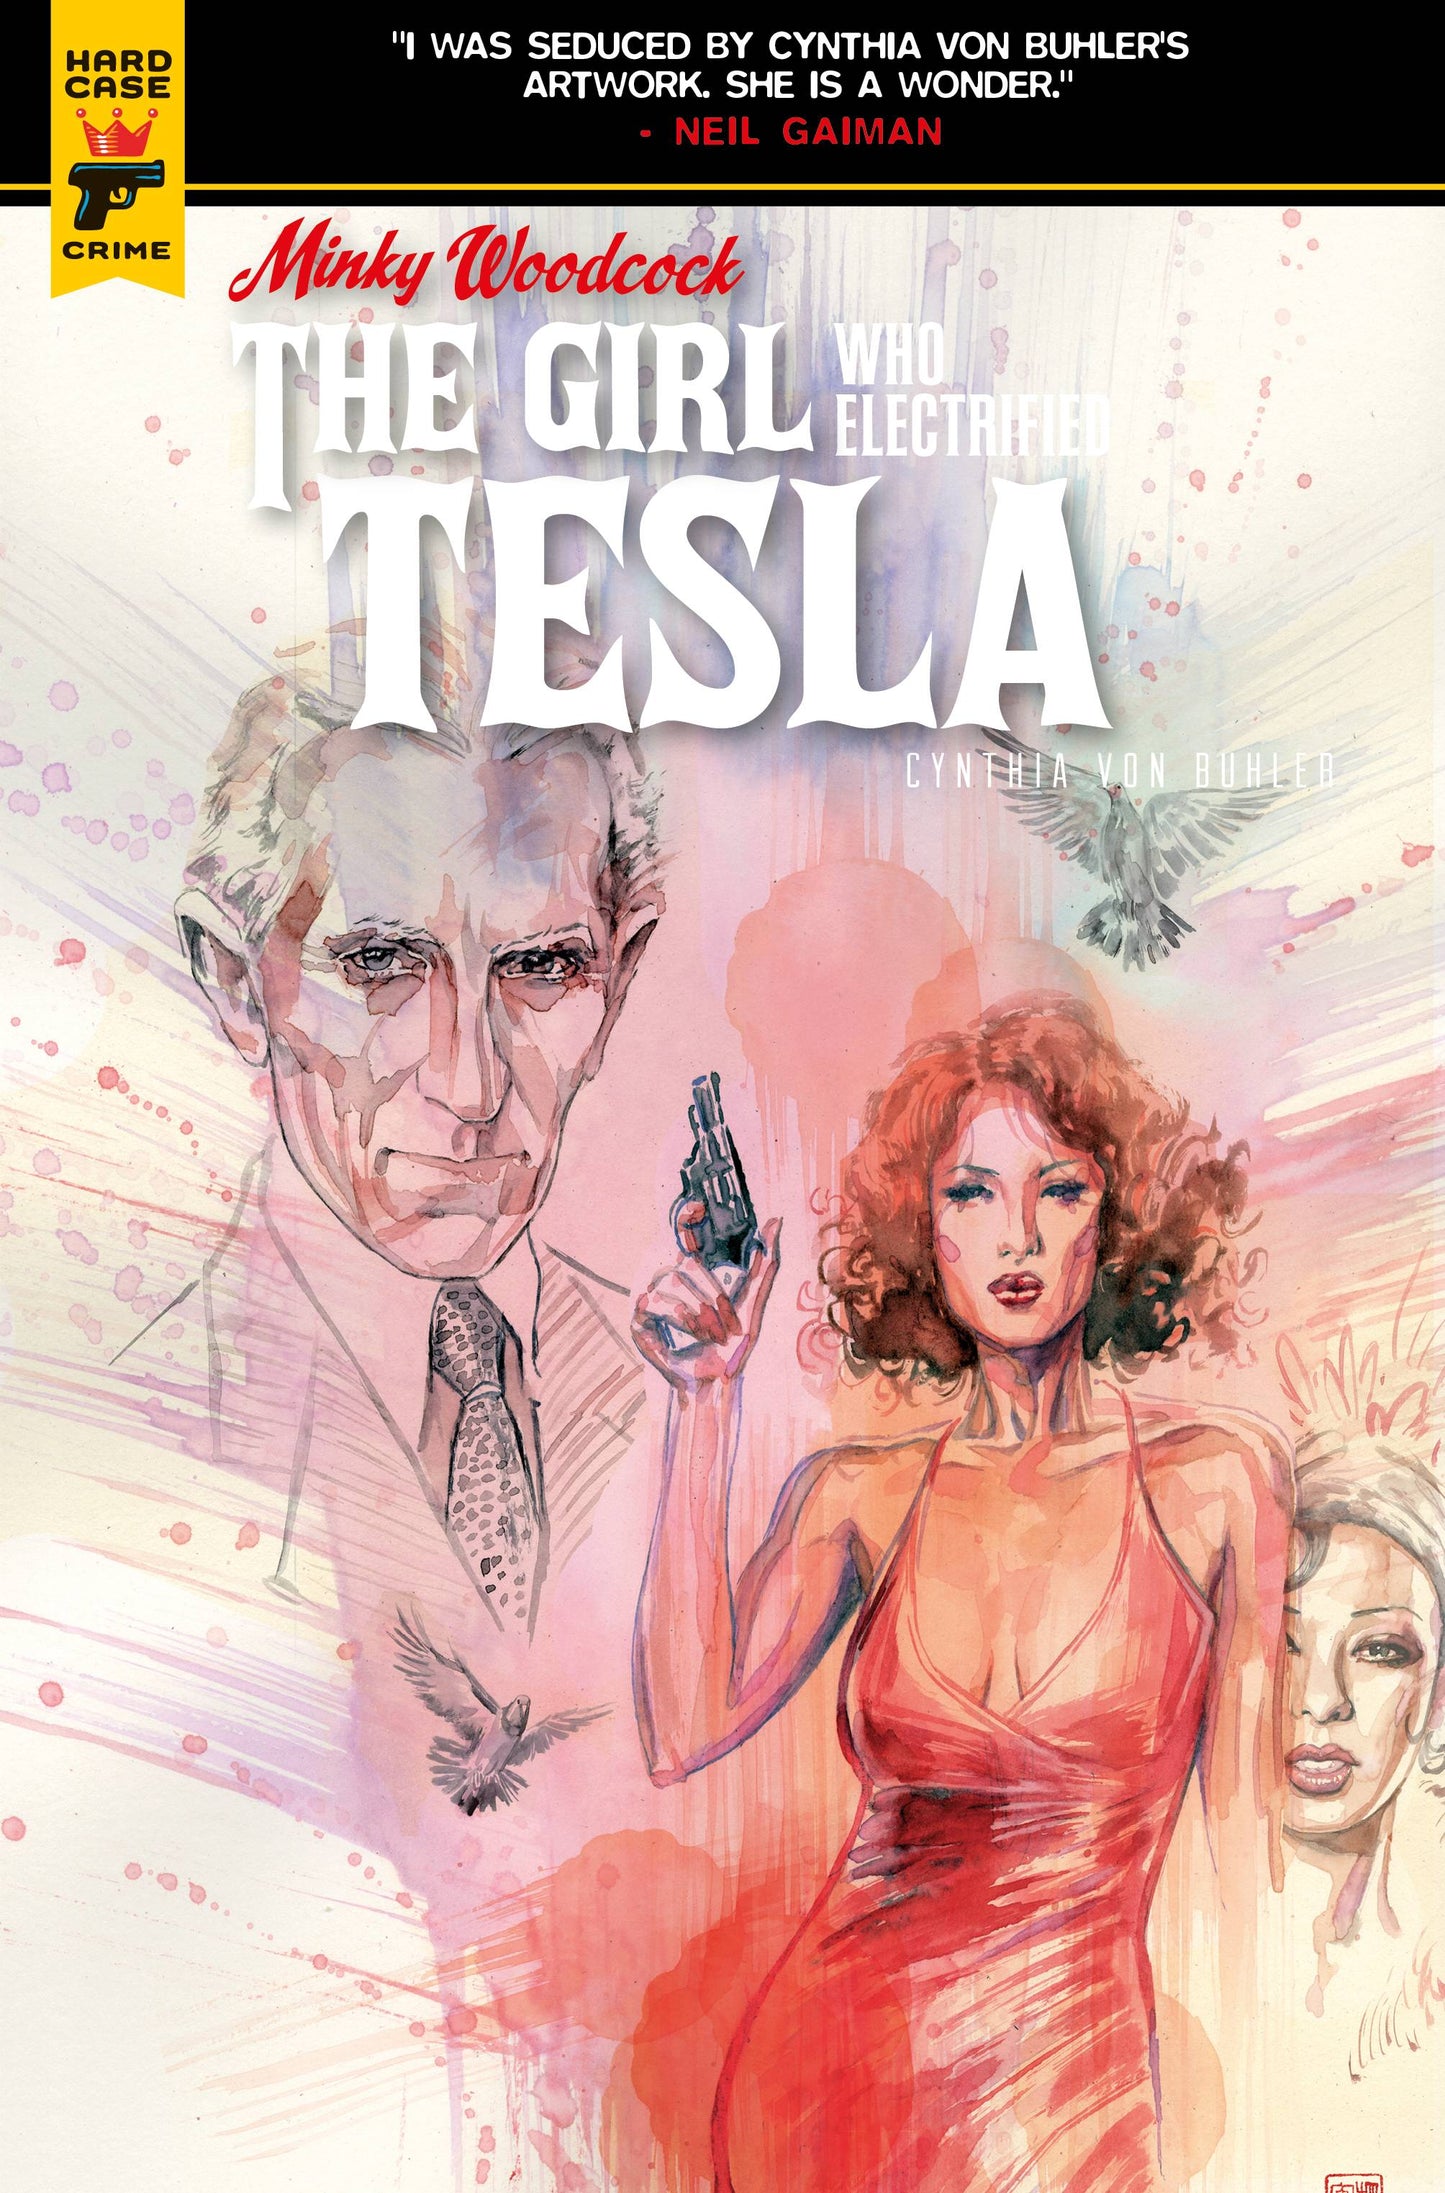 Minky Woodcock: The Girl Who Electrified Tesla Vol. 1 #3